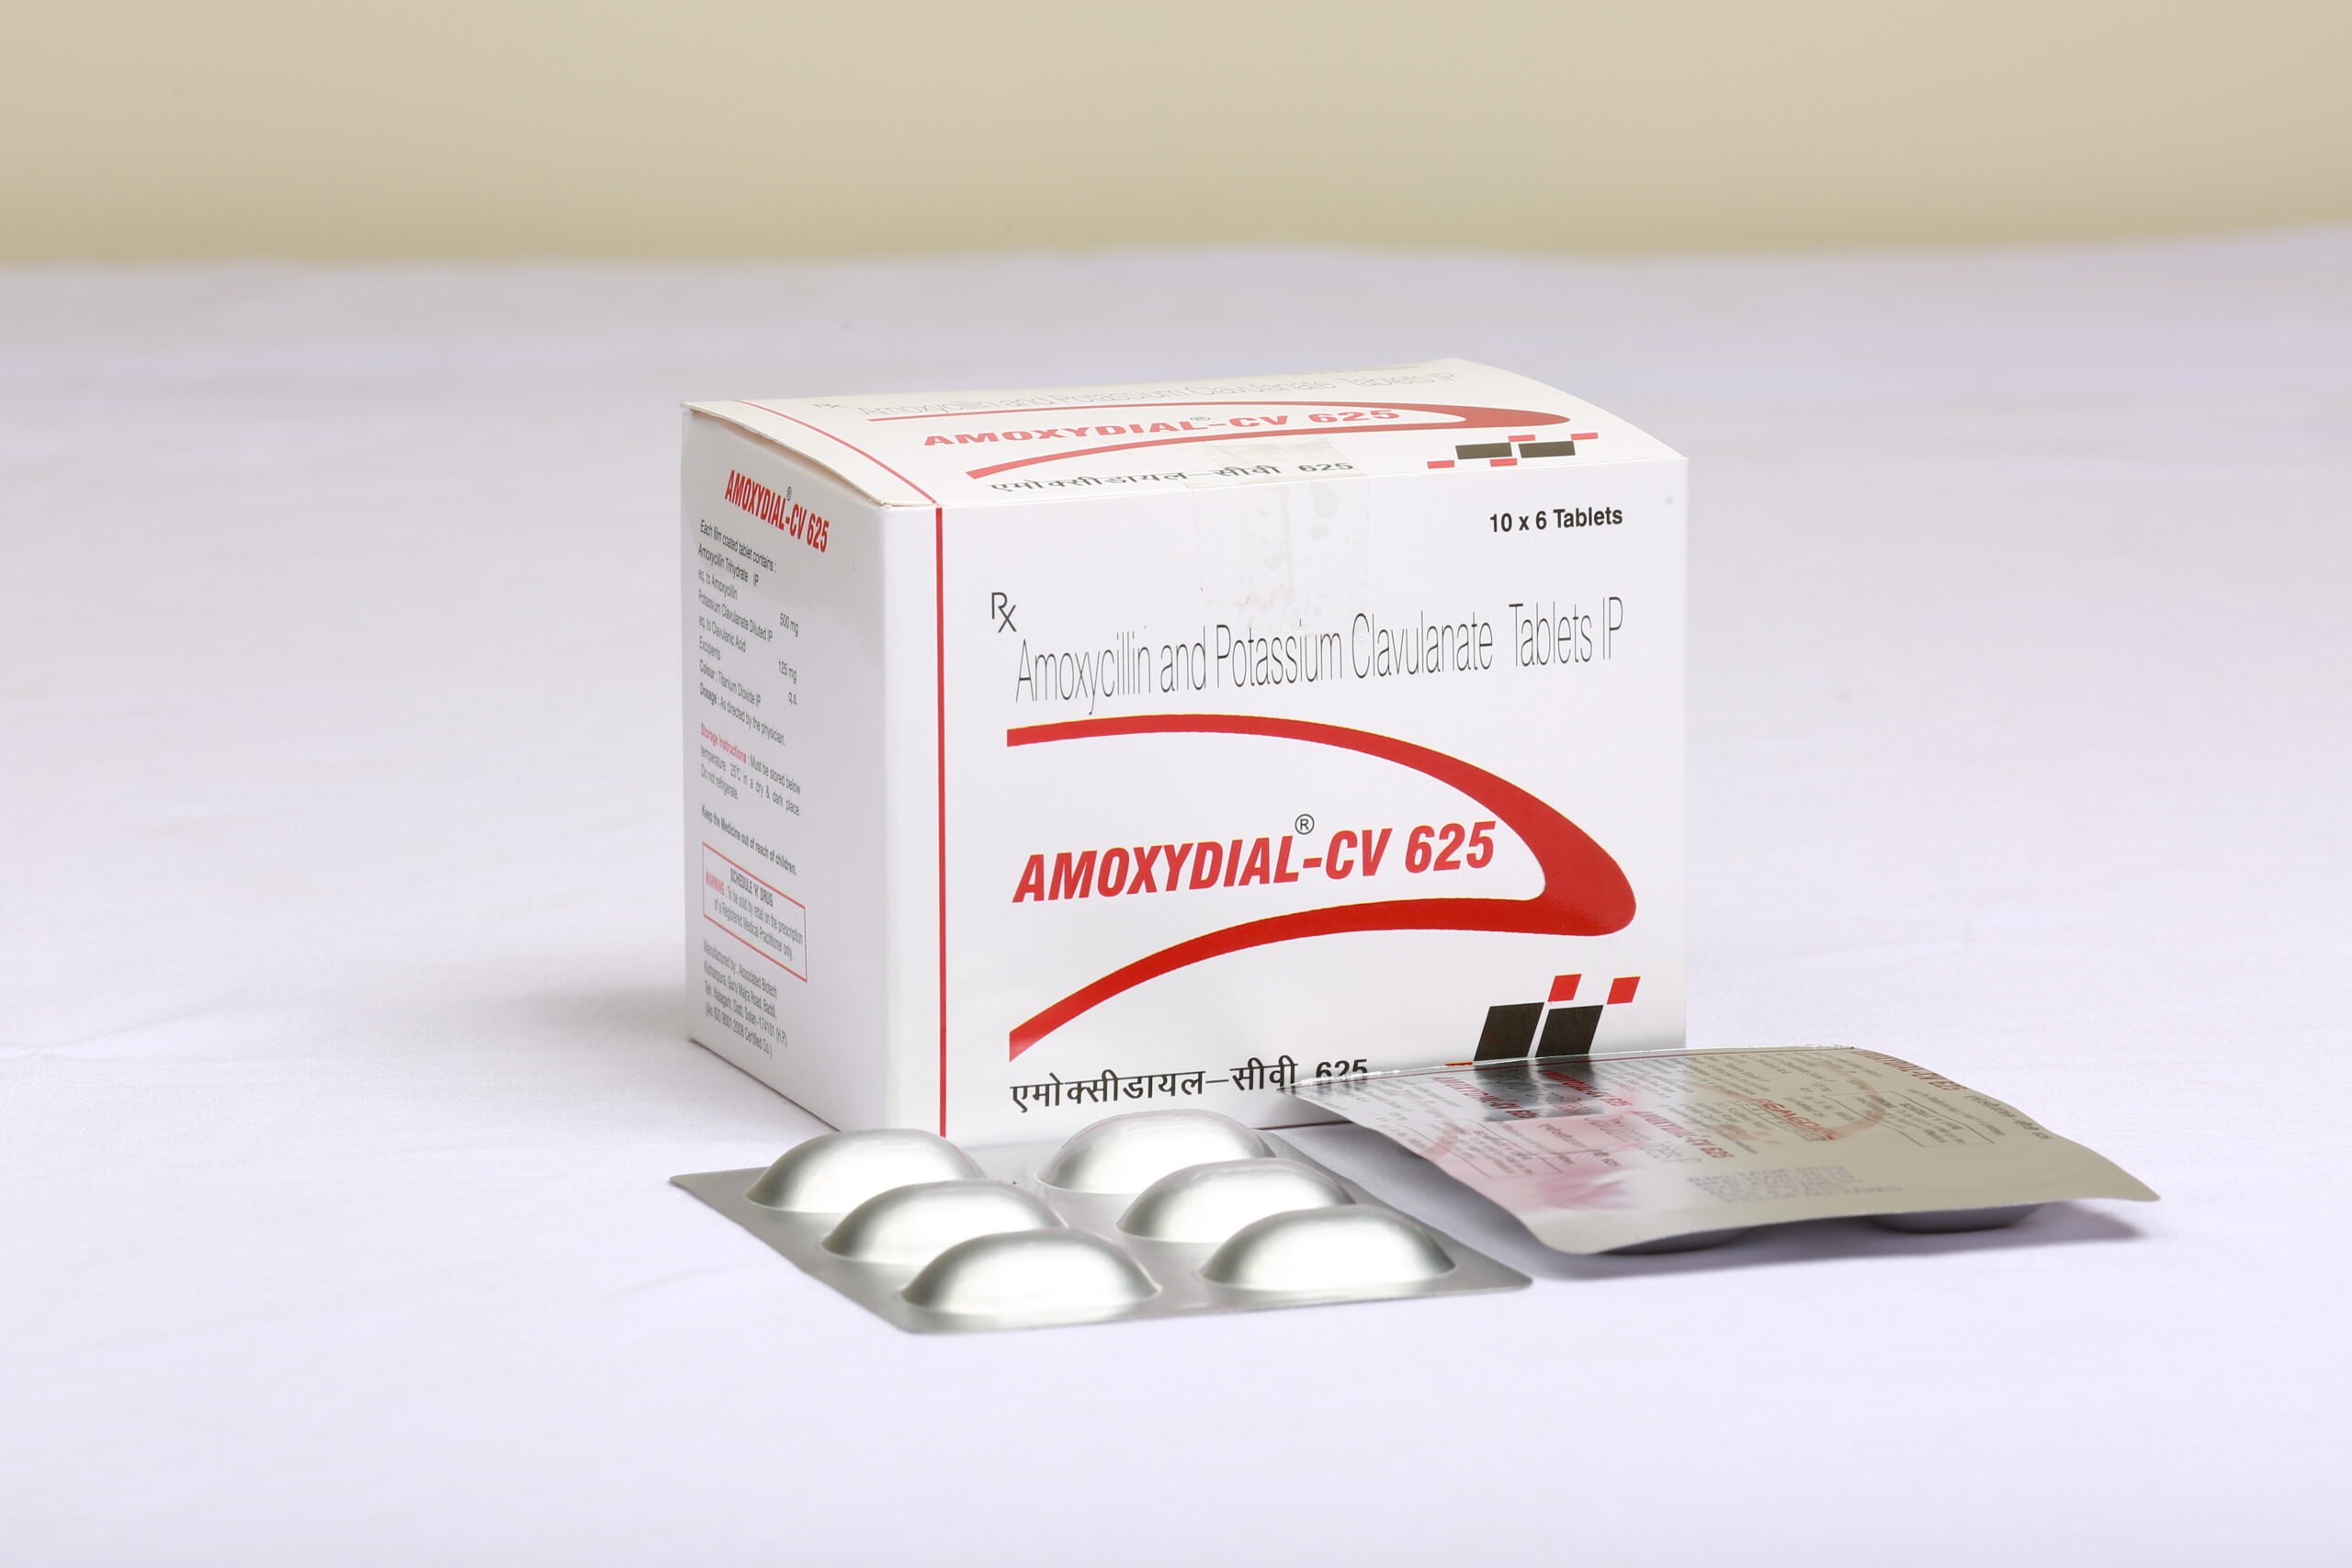 AMOXYDIAL-CV-625 (Amoxycillin + Clavulanate Potassium)